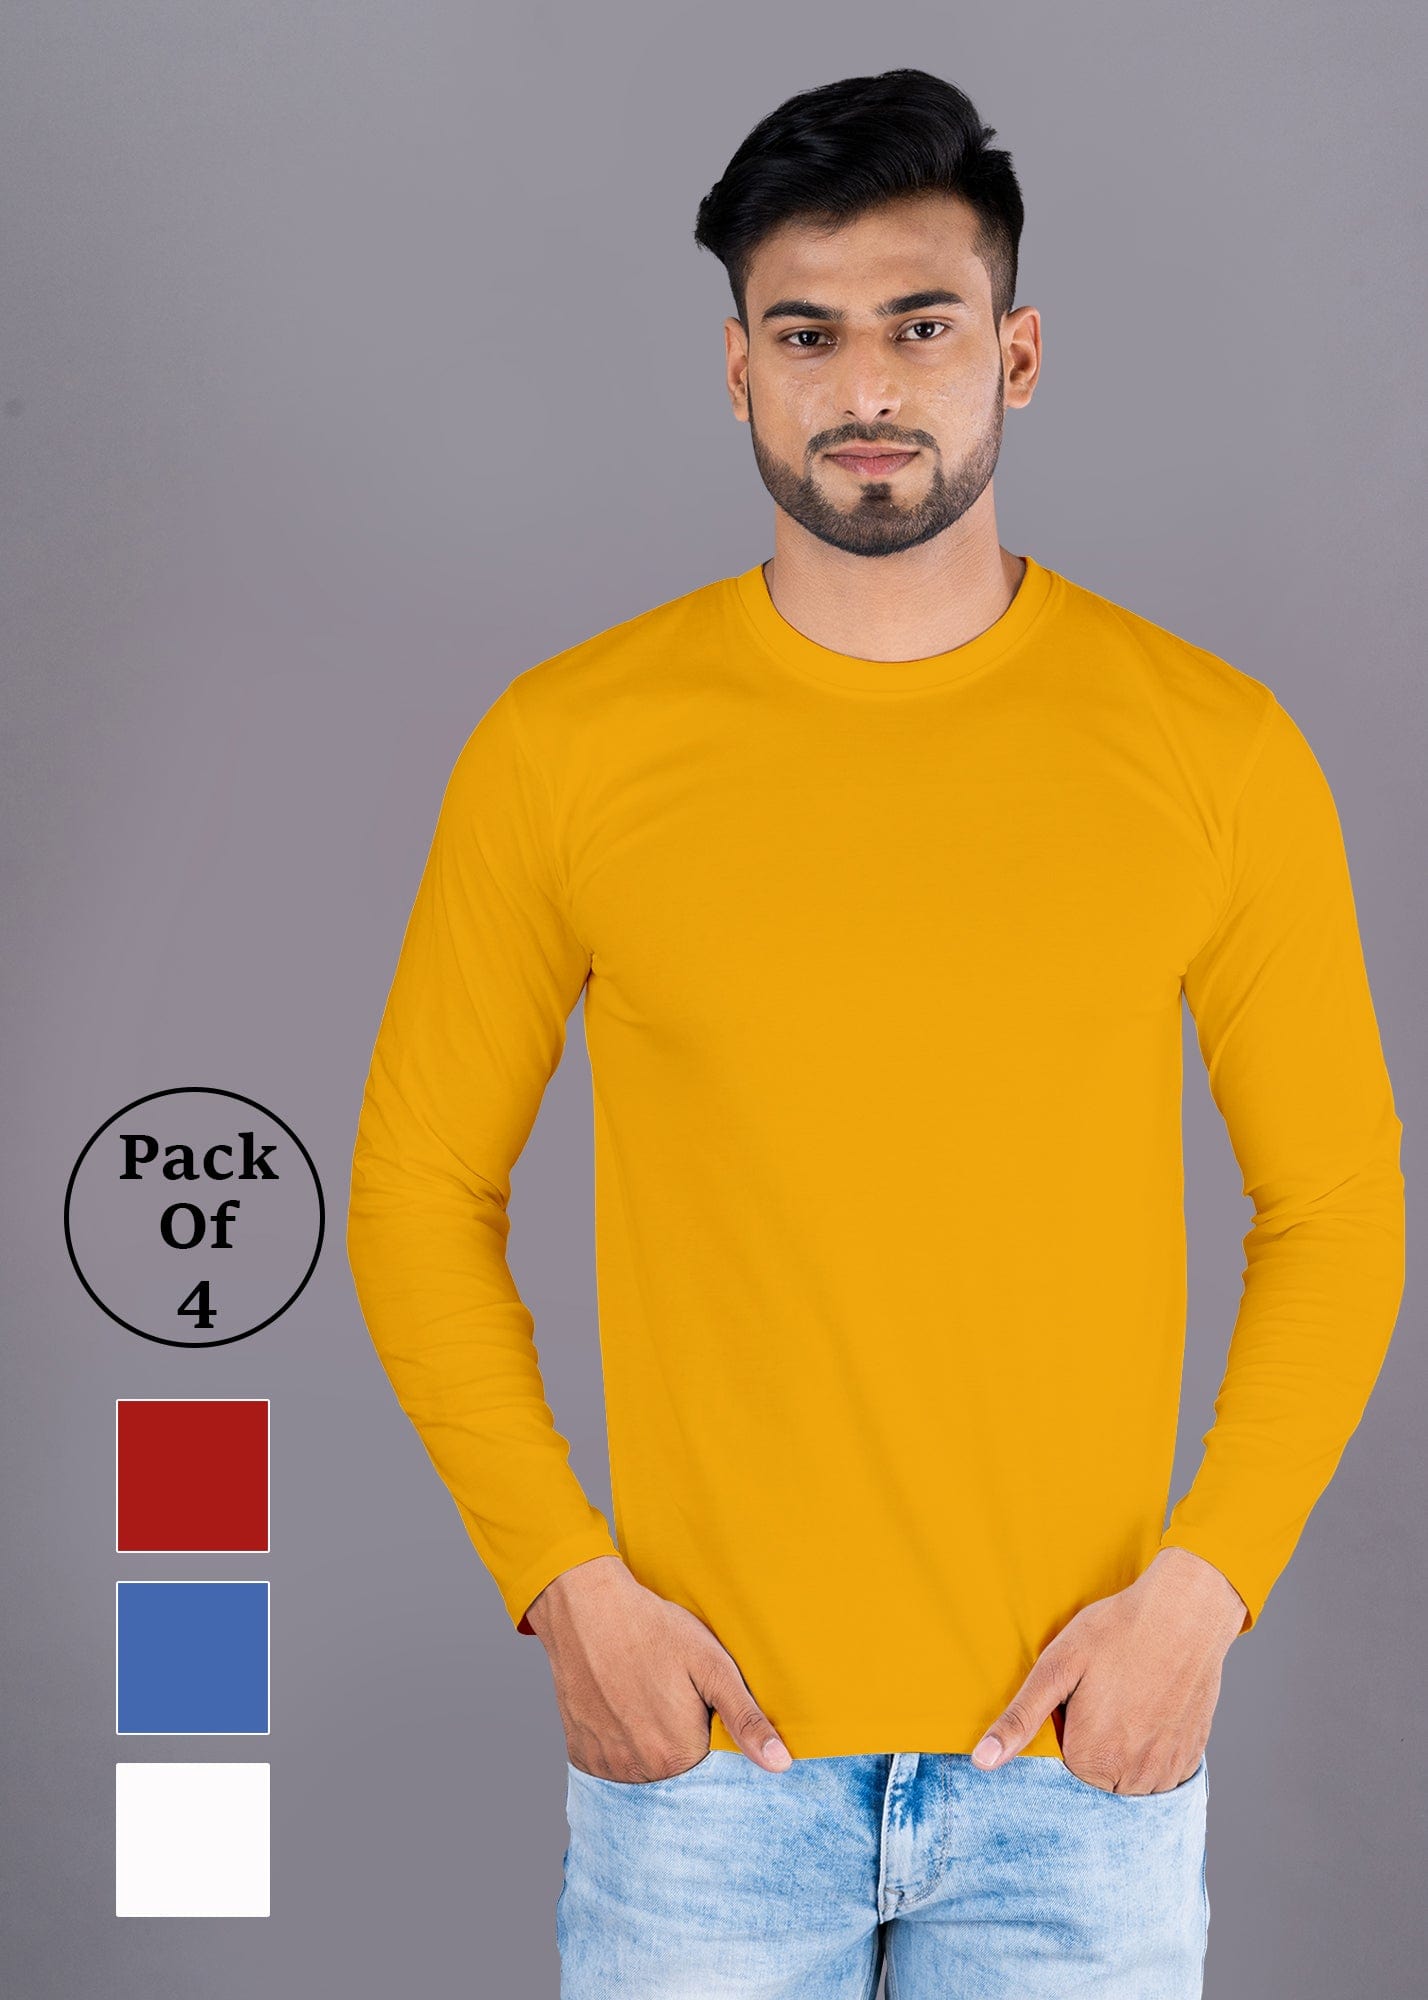 Solid Full Sleeve Premium Cotton T-Shirt For Men - Pack Of 4